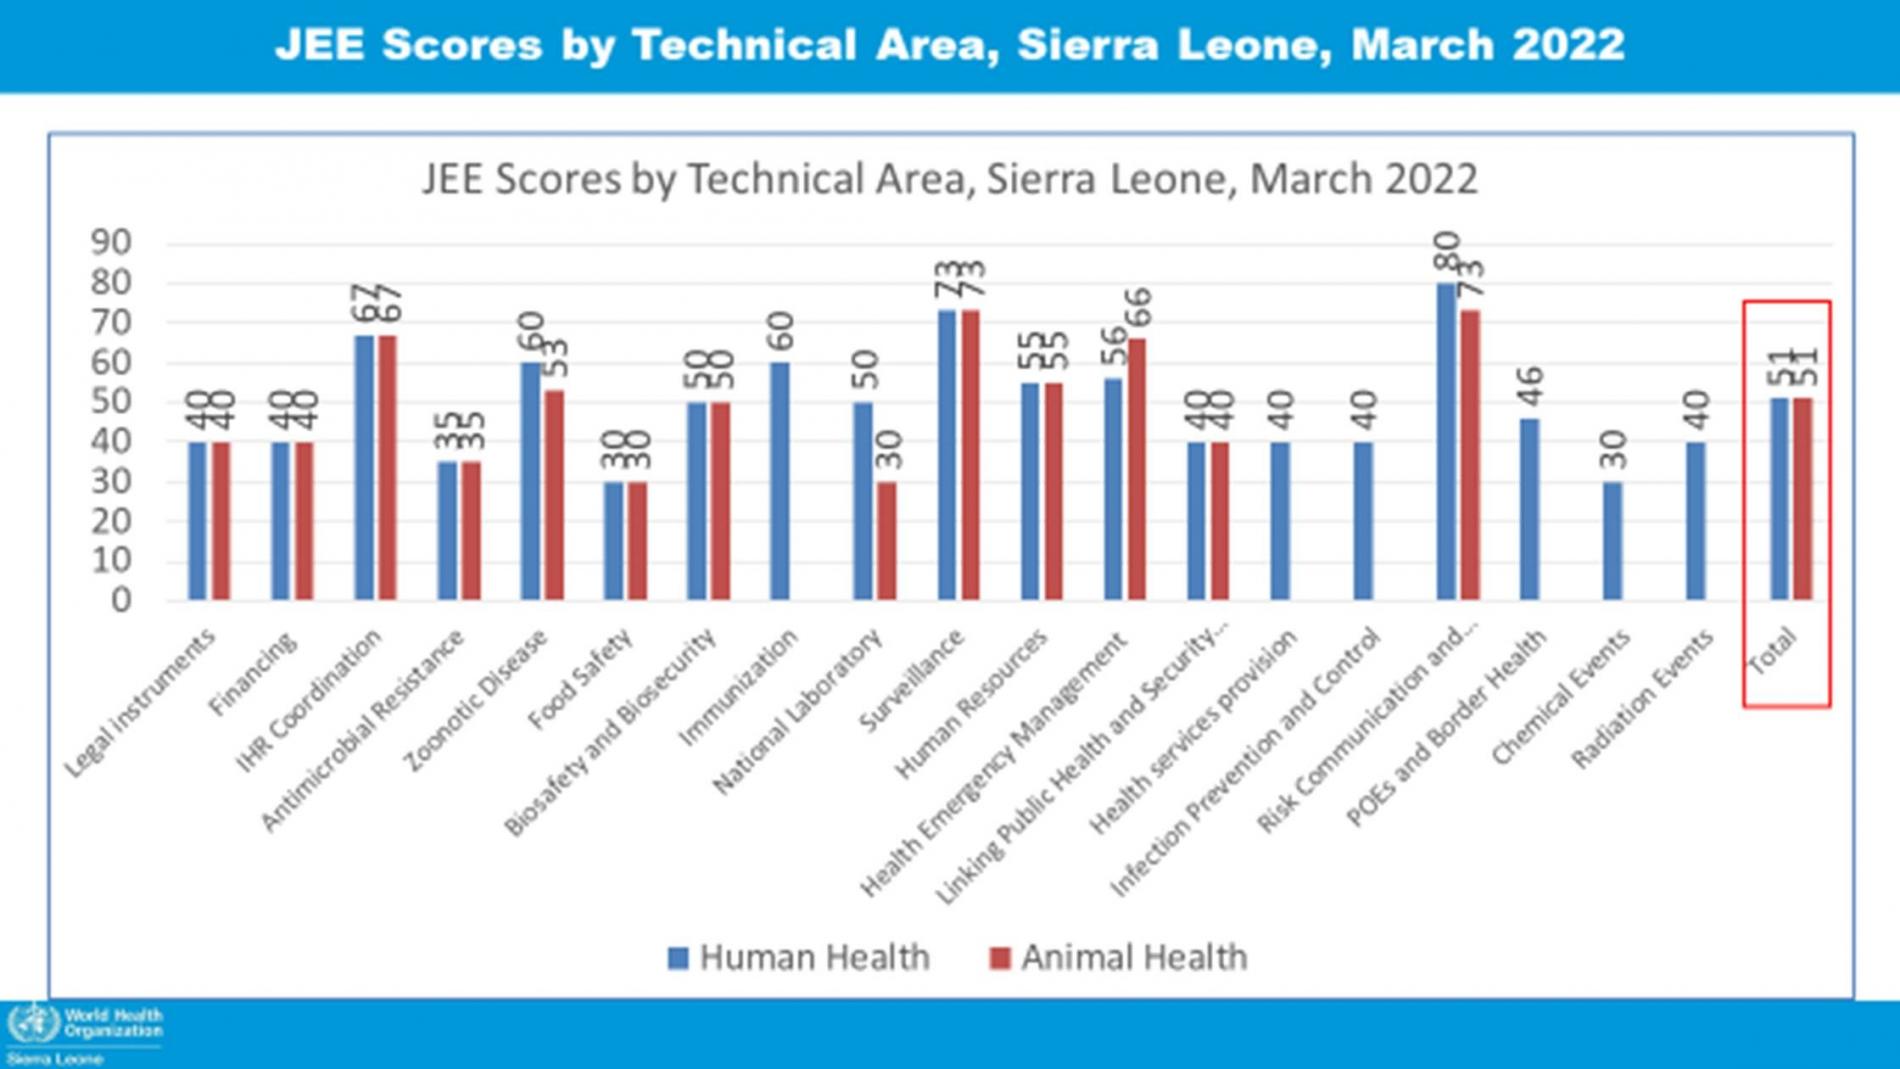 Joint External Evaluation Scorecard by Technical Area, Sierra Leone - March 2022